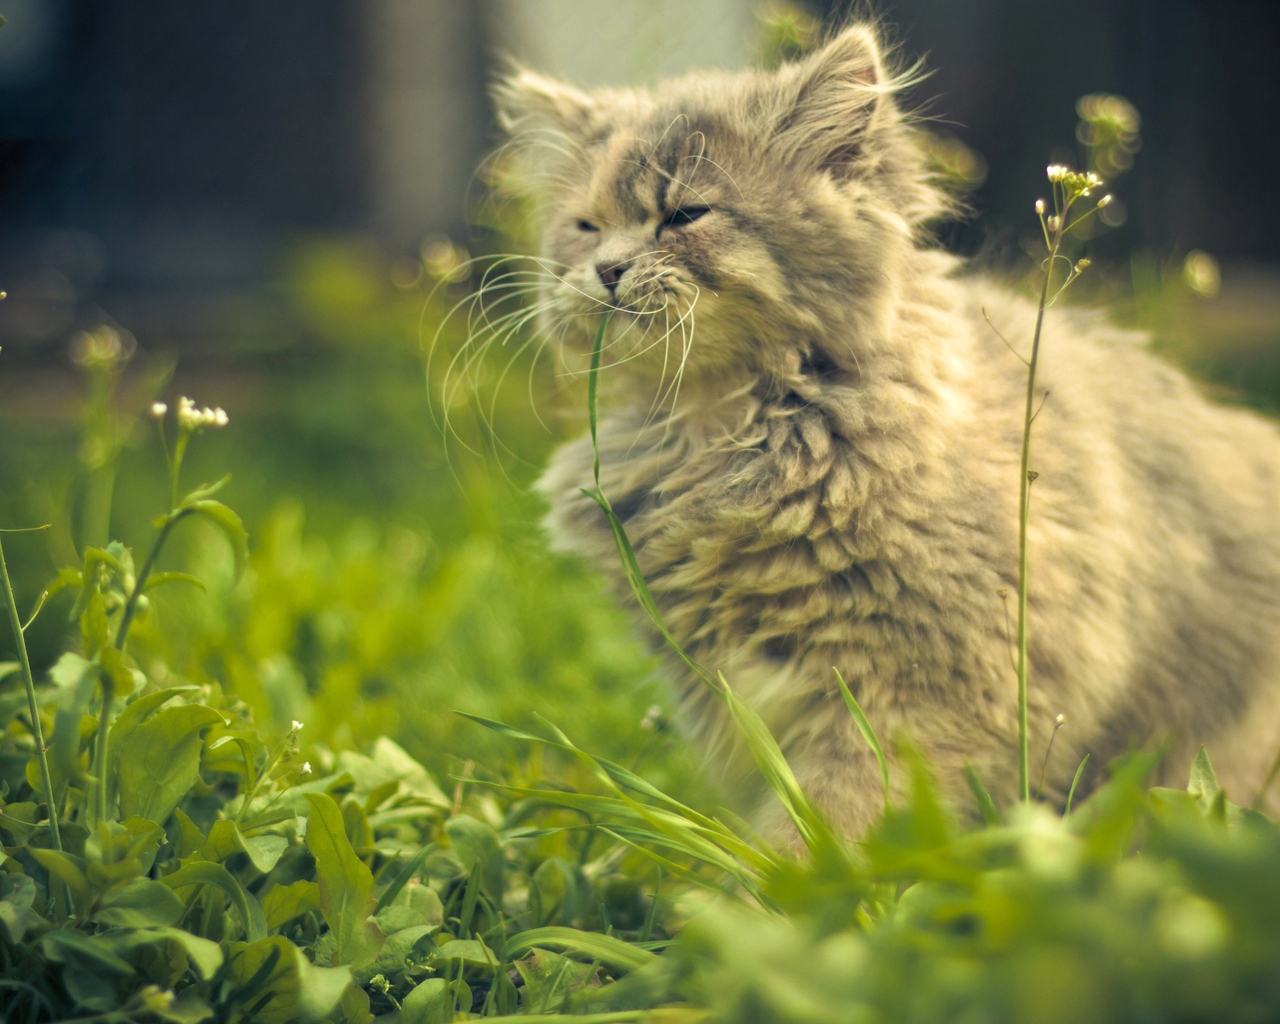 Image: Kitty, wool, mustache, grass, summer, day